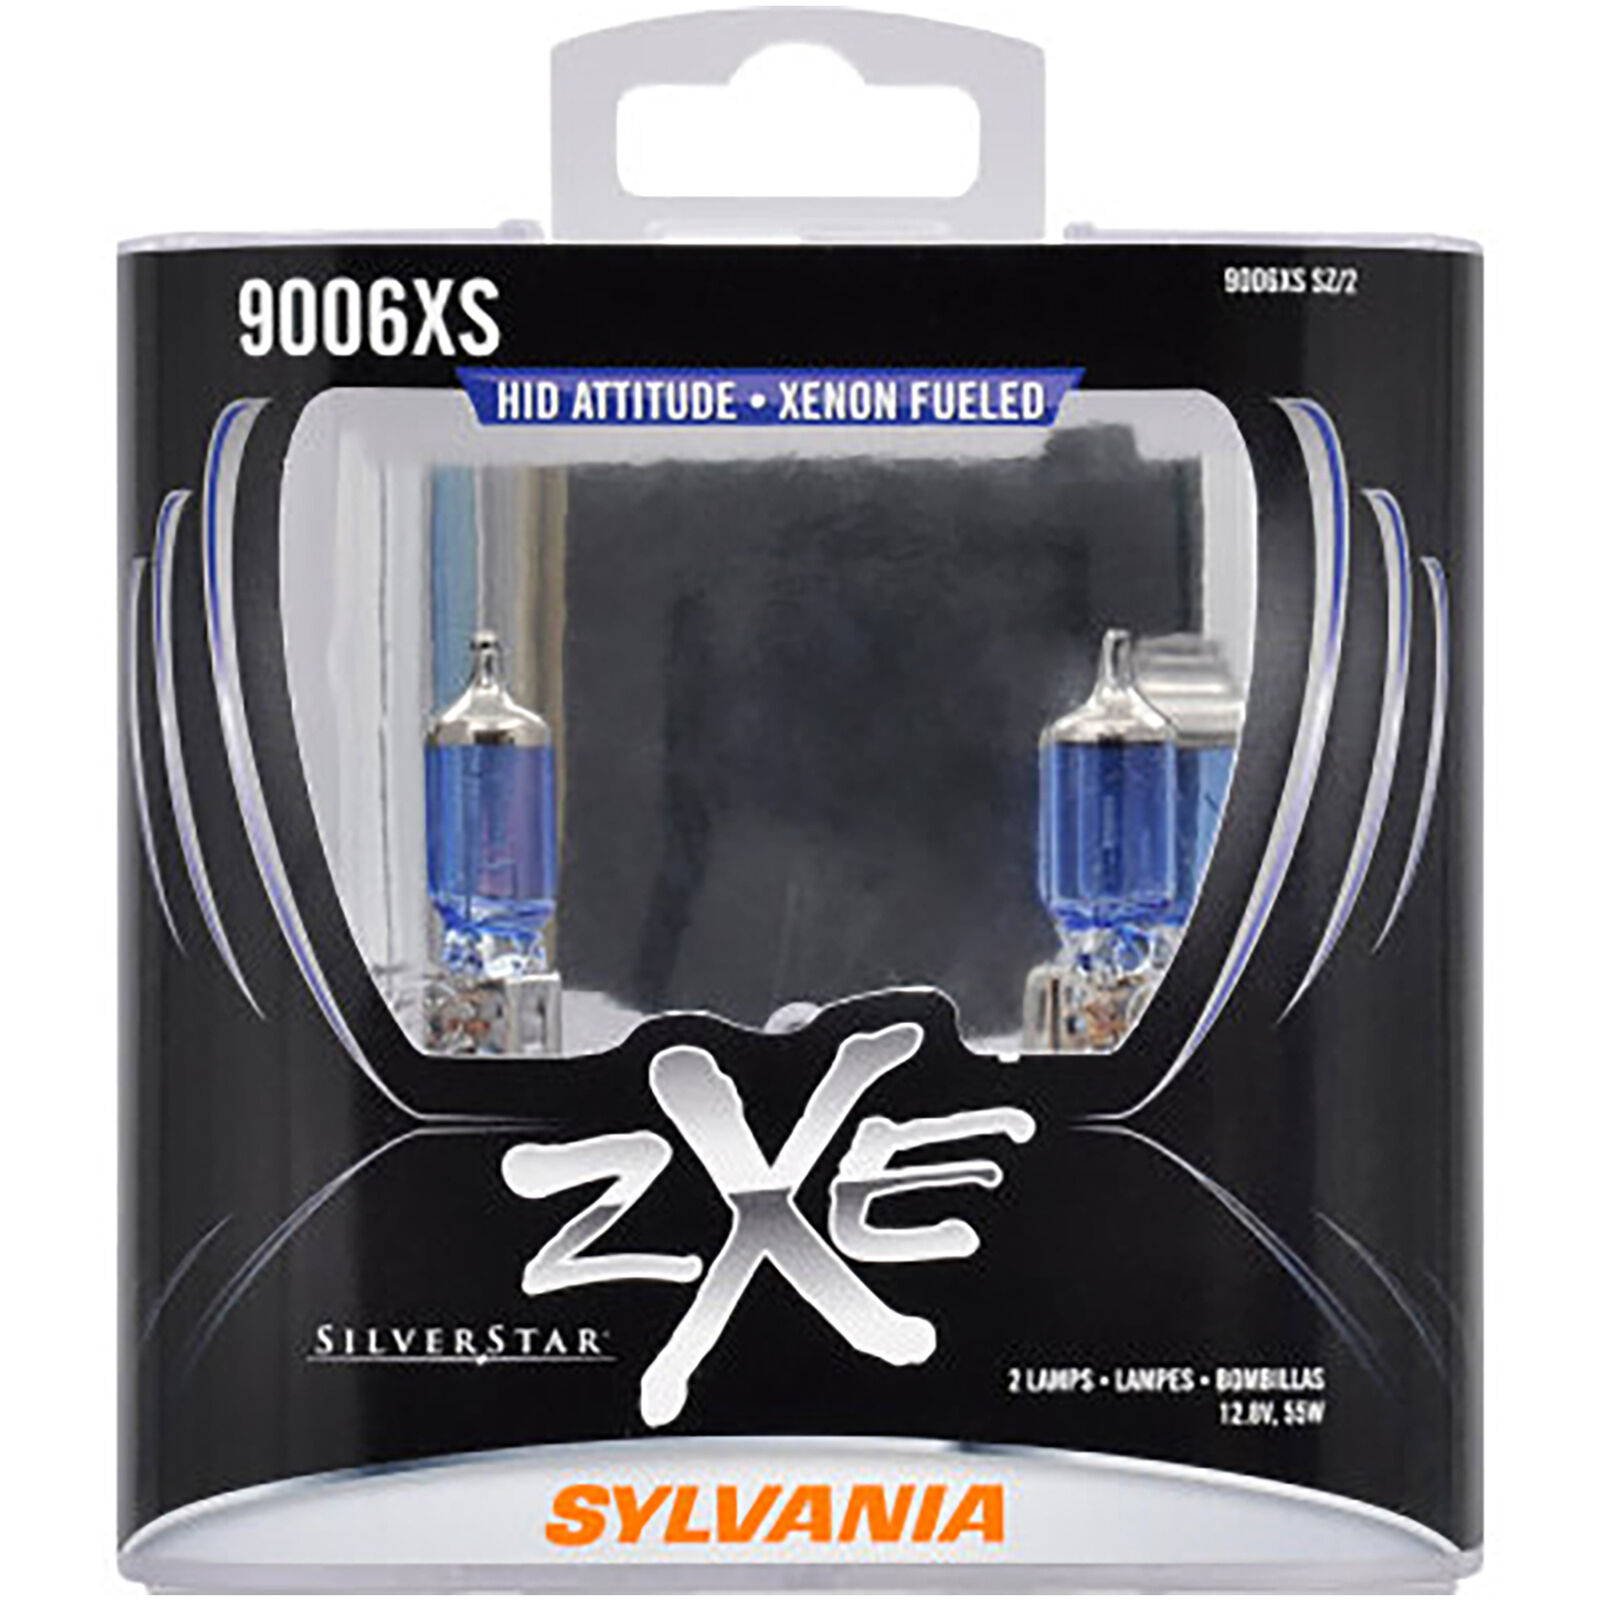 SYLVANIA 9006XS SilverStar zXe High Performance Halogen Headlight Bulb, 2 Bulbs